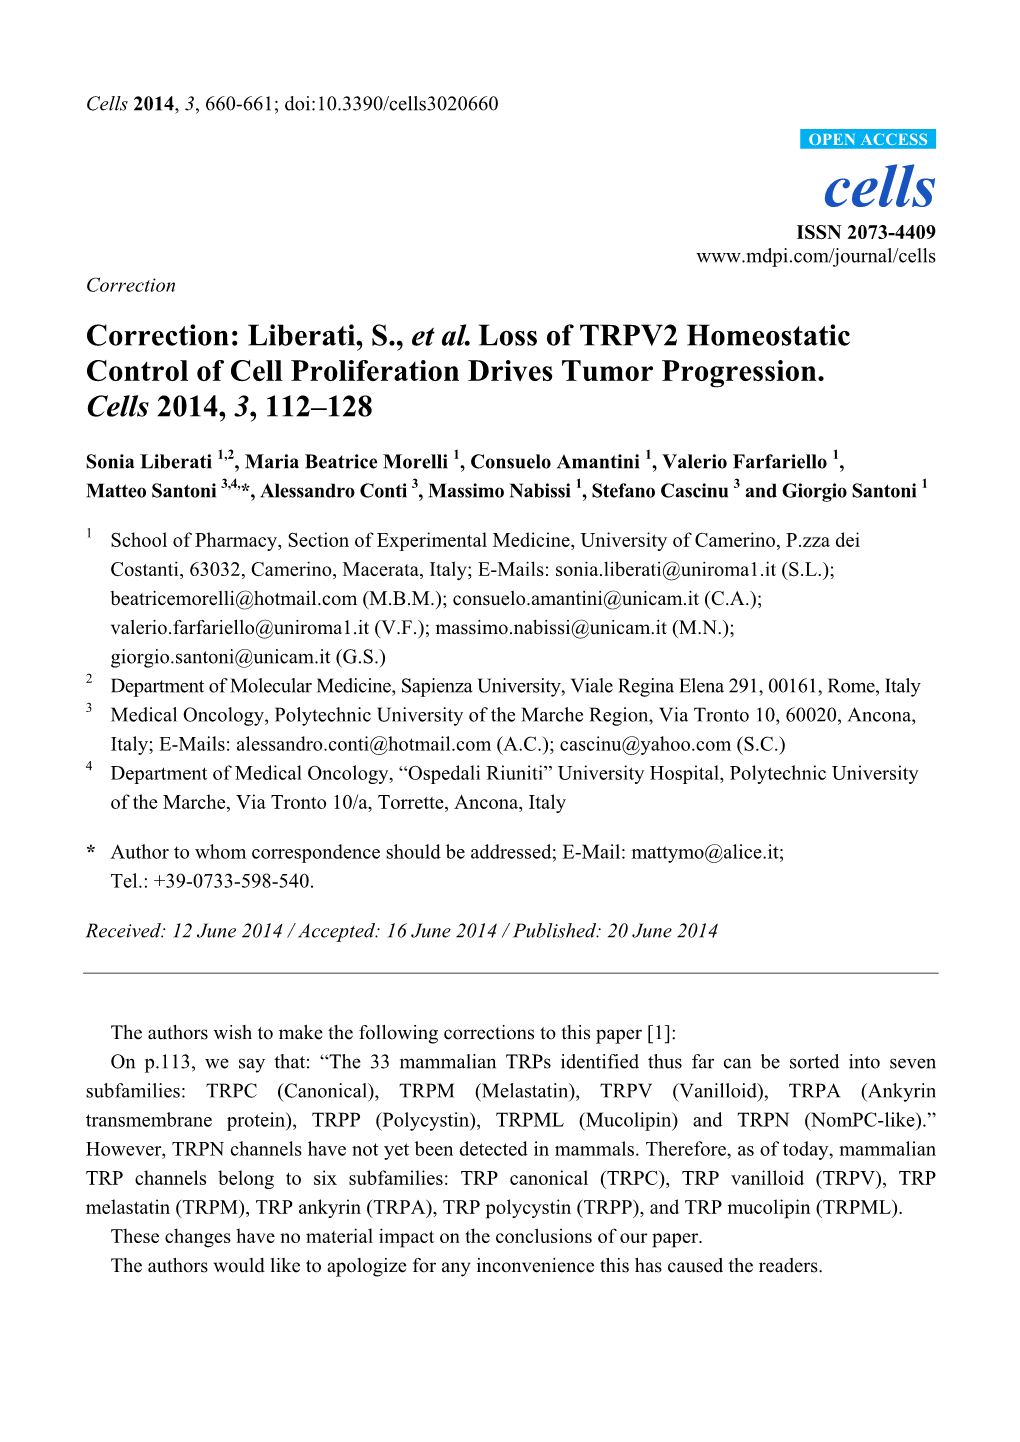 Correction: Liberati, S., Et Al. Loss of TRPV2 Homeostatic Control of Cell Proliferation Drives Tumor Progression